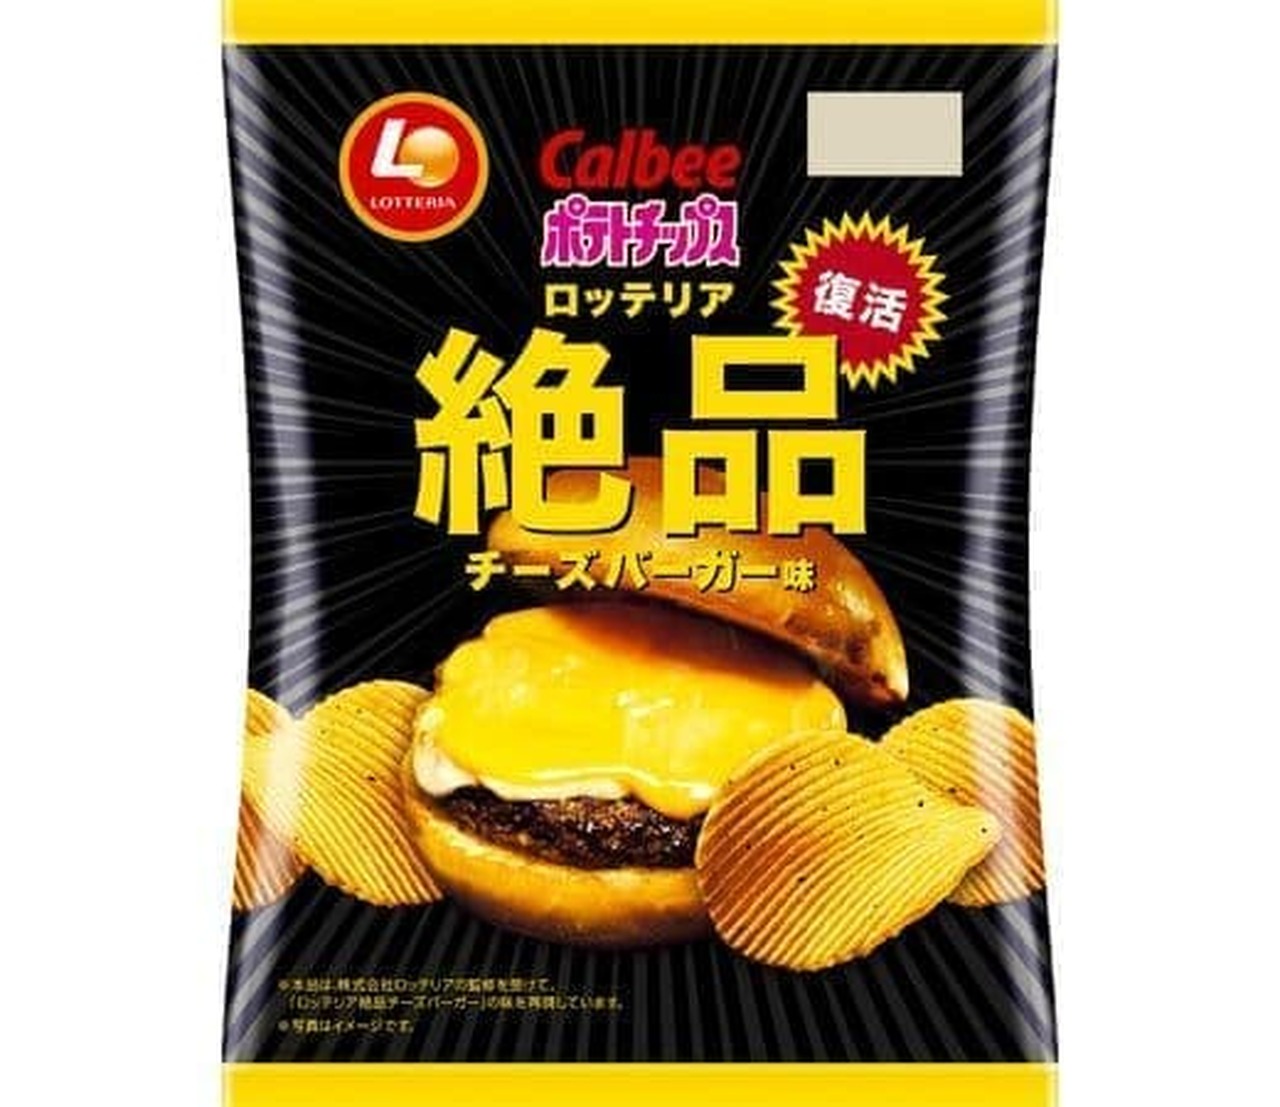 Calbee "Potato Chips Lotteria Exquisite Cheeseburger Flavor"